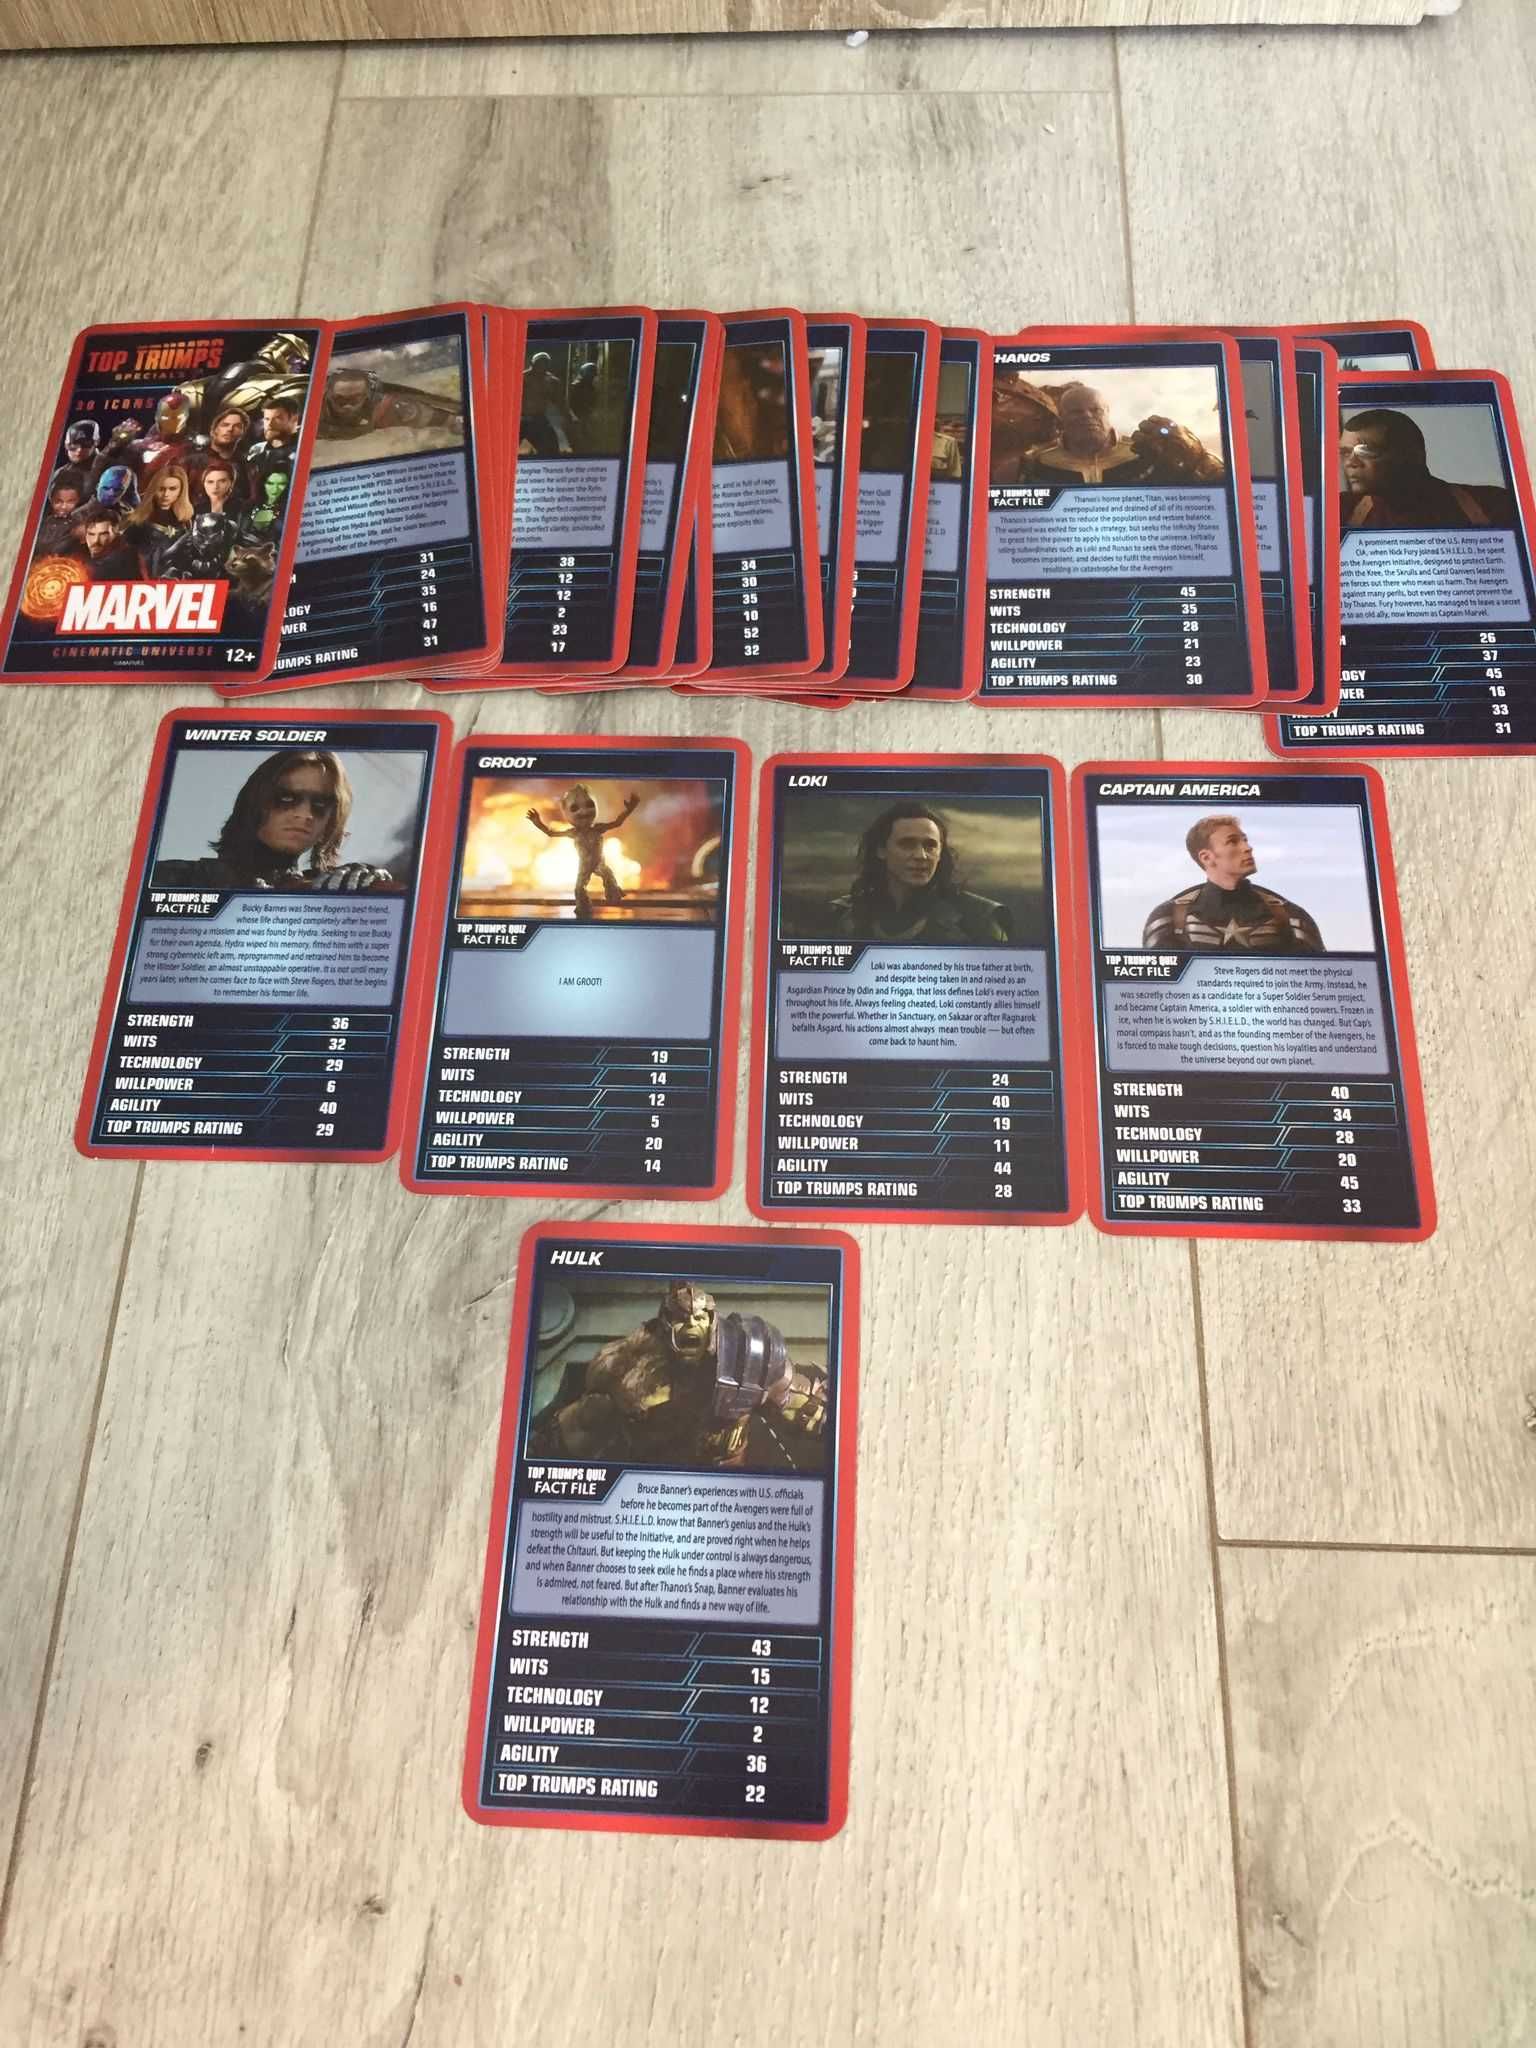 Marvel karty do grania 12+